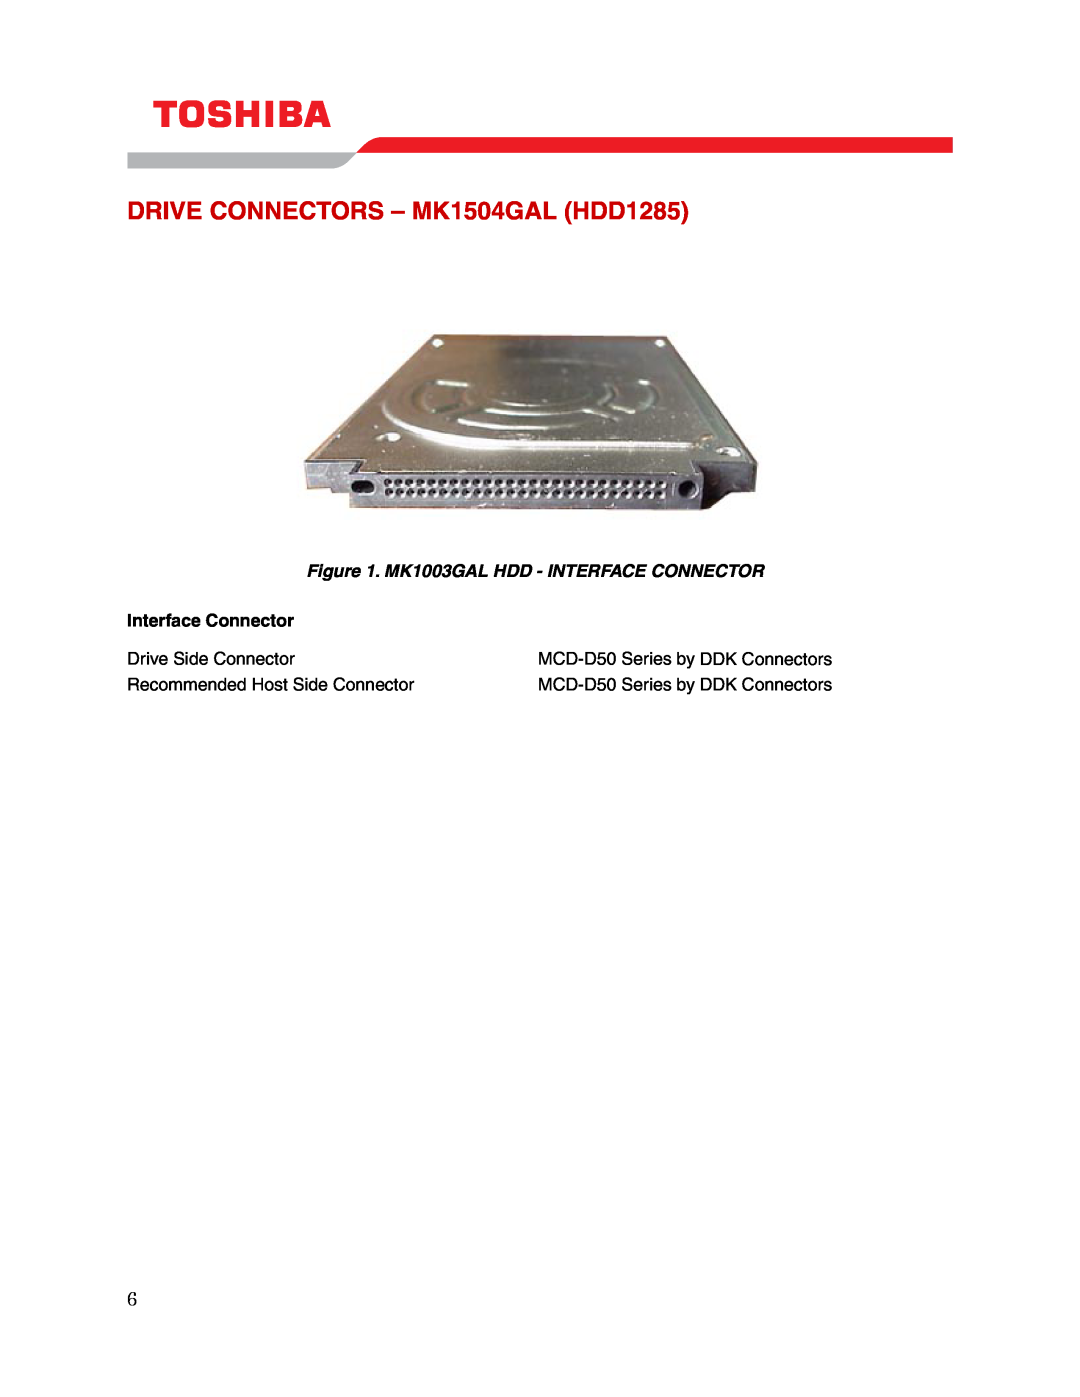 Toshiba user manual DRIVE CONNECTORS - MK1504GAL HDD1285, MK1003GAL HDD - INTERFACE CONNECTOR, Interface Connector 